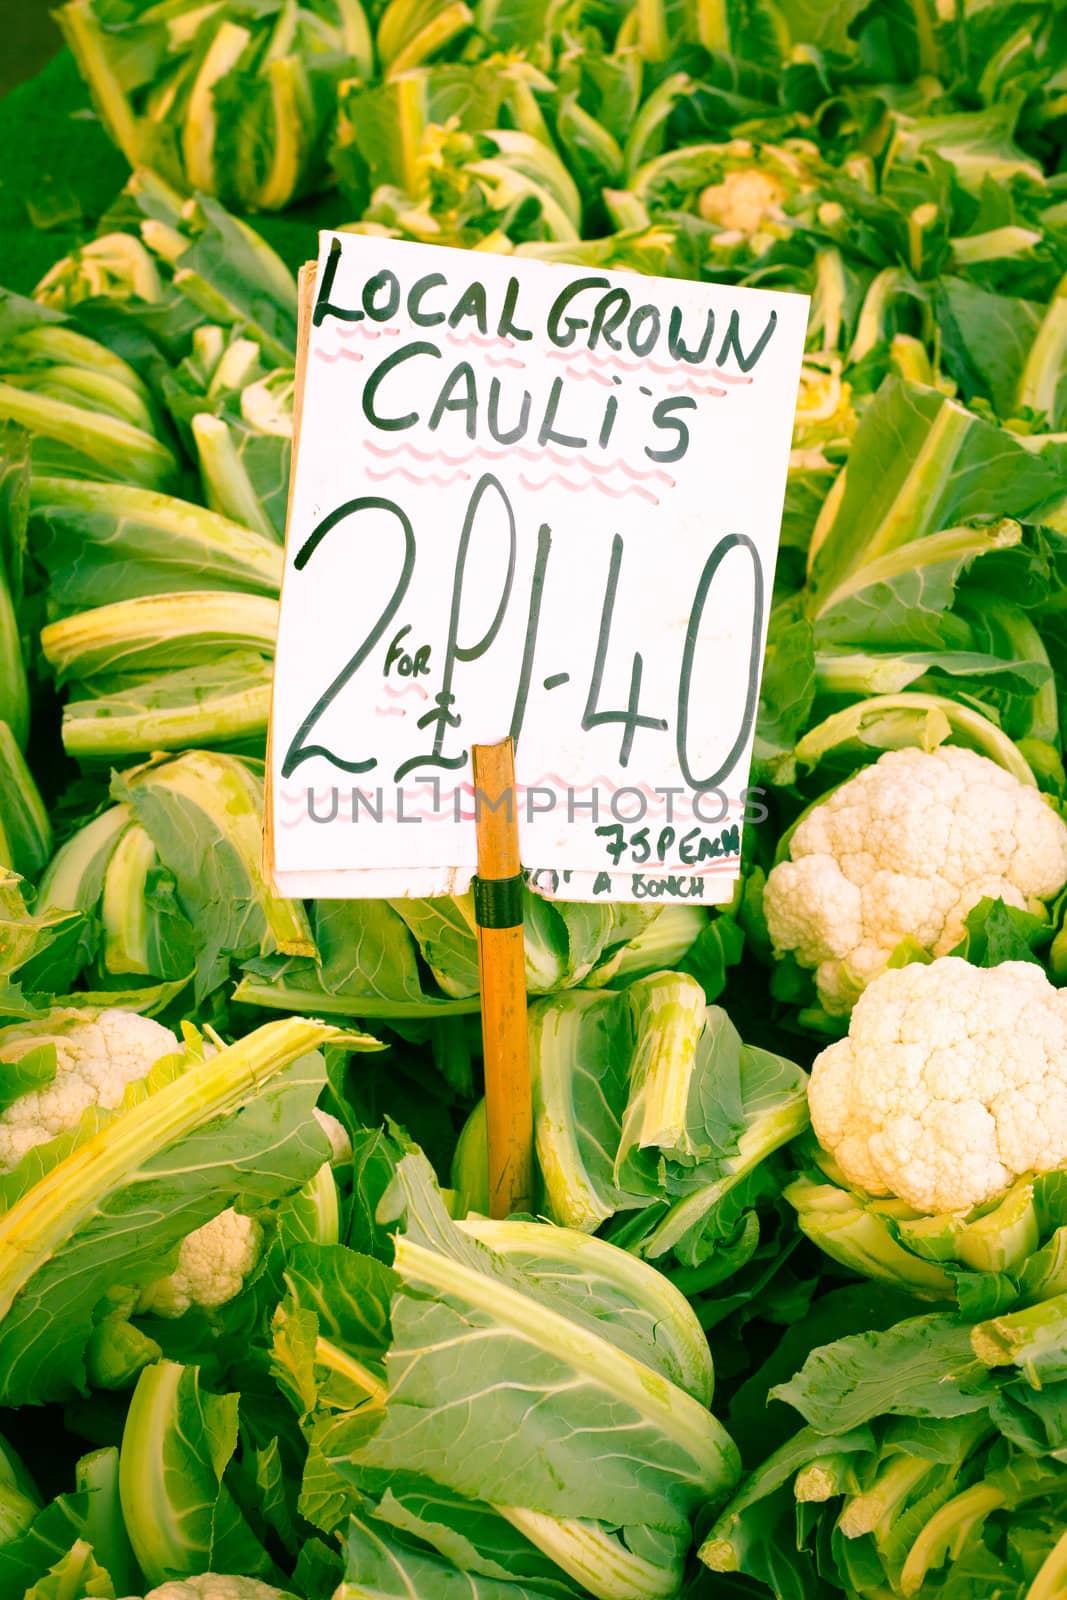 Fresh cauliflowers for sale at an english market